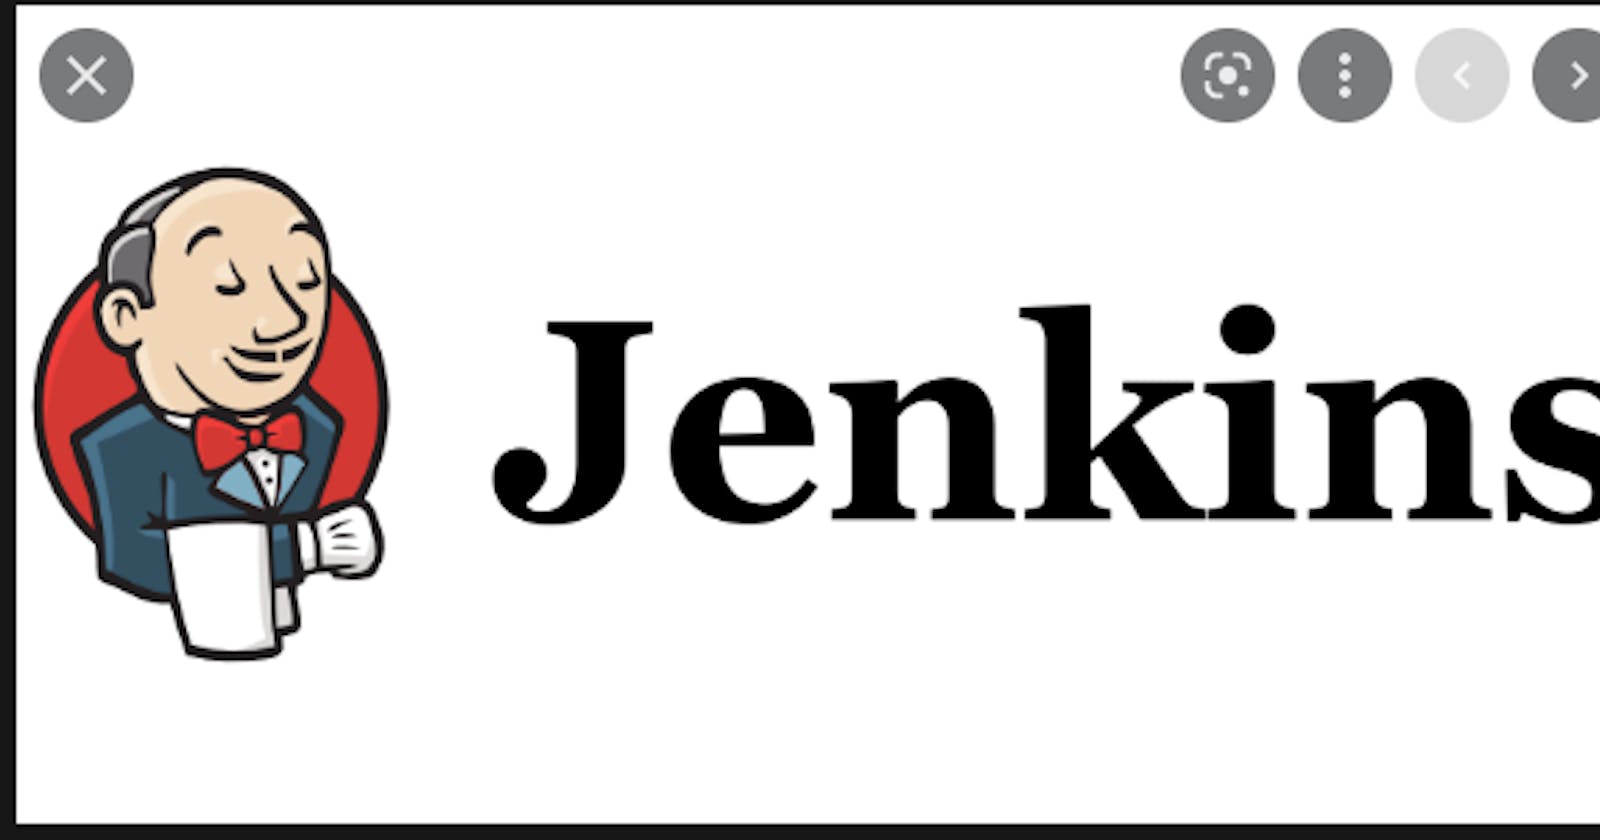 How to use Jenkins on an Ubuntu OS